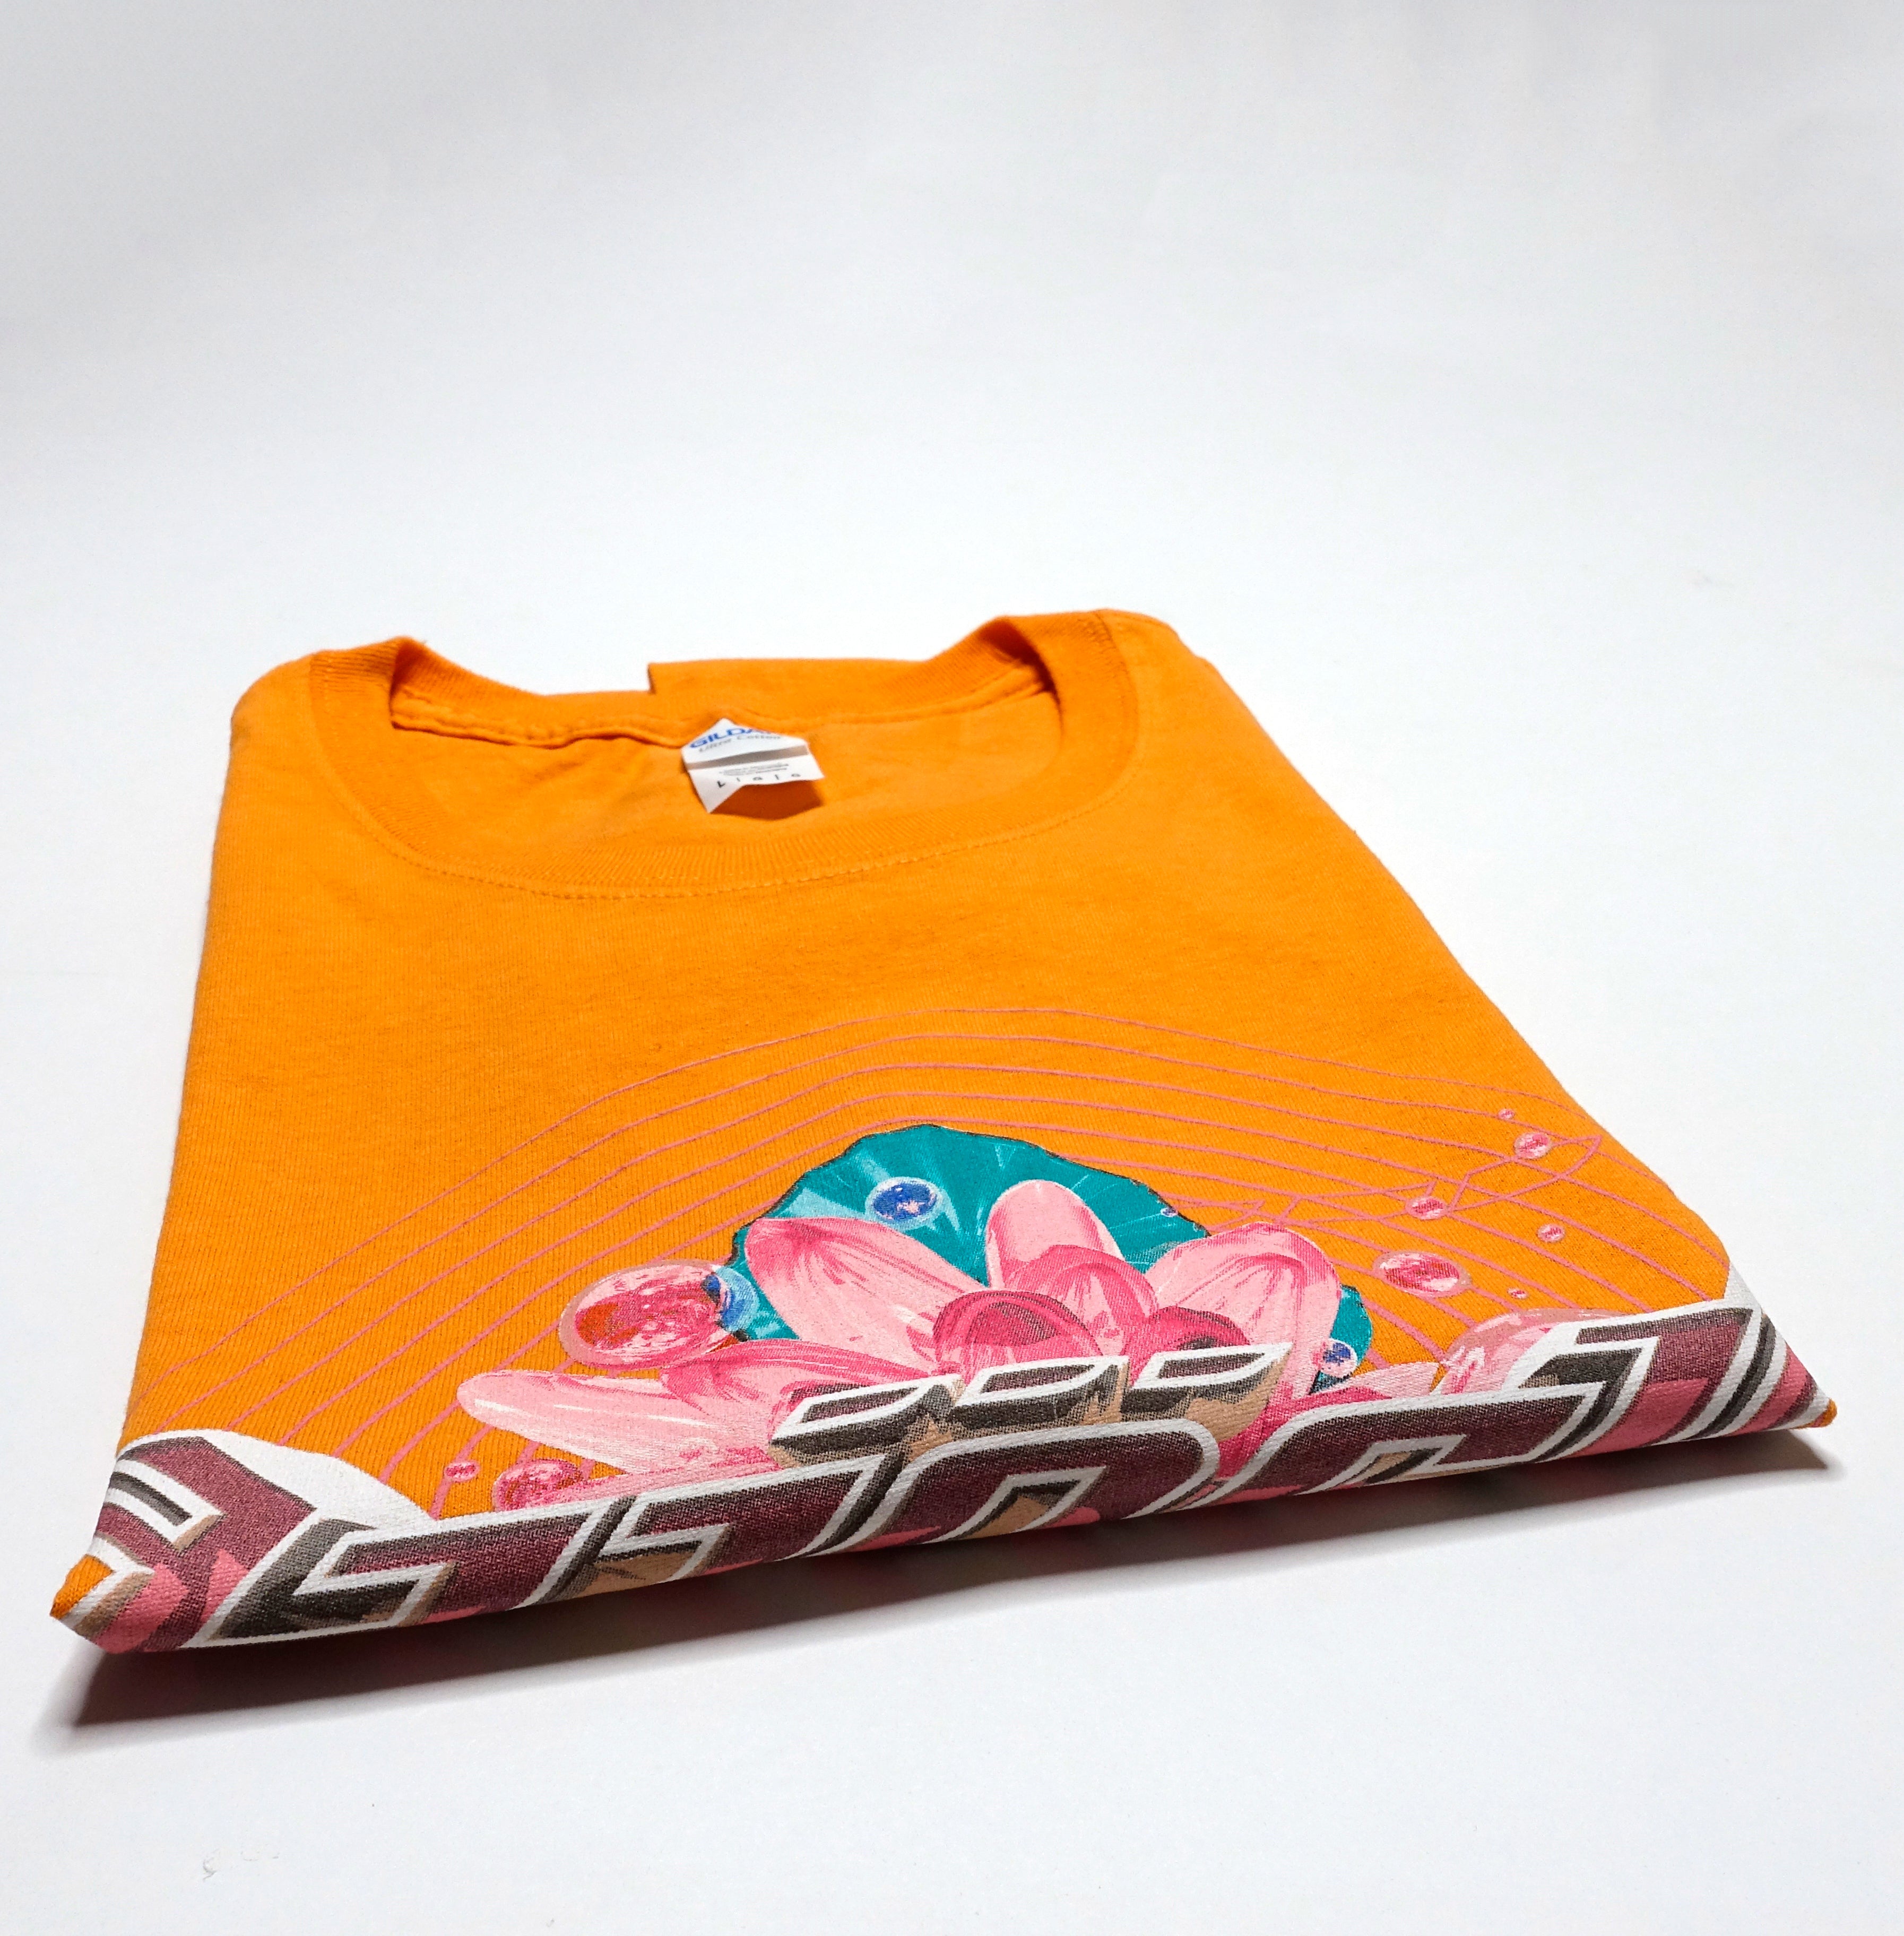 Björk - Post Orange One Little Indian Reproduction Shirt Size Large